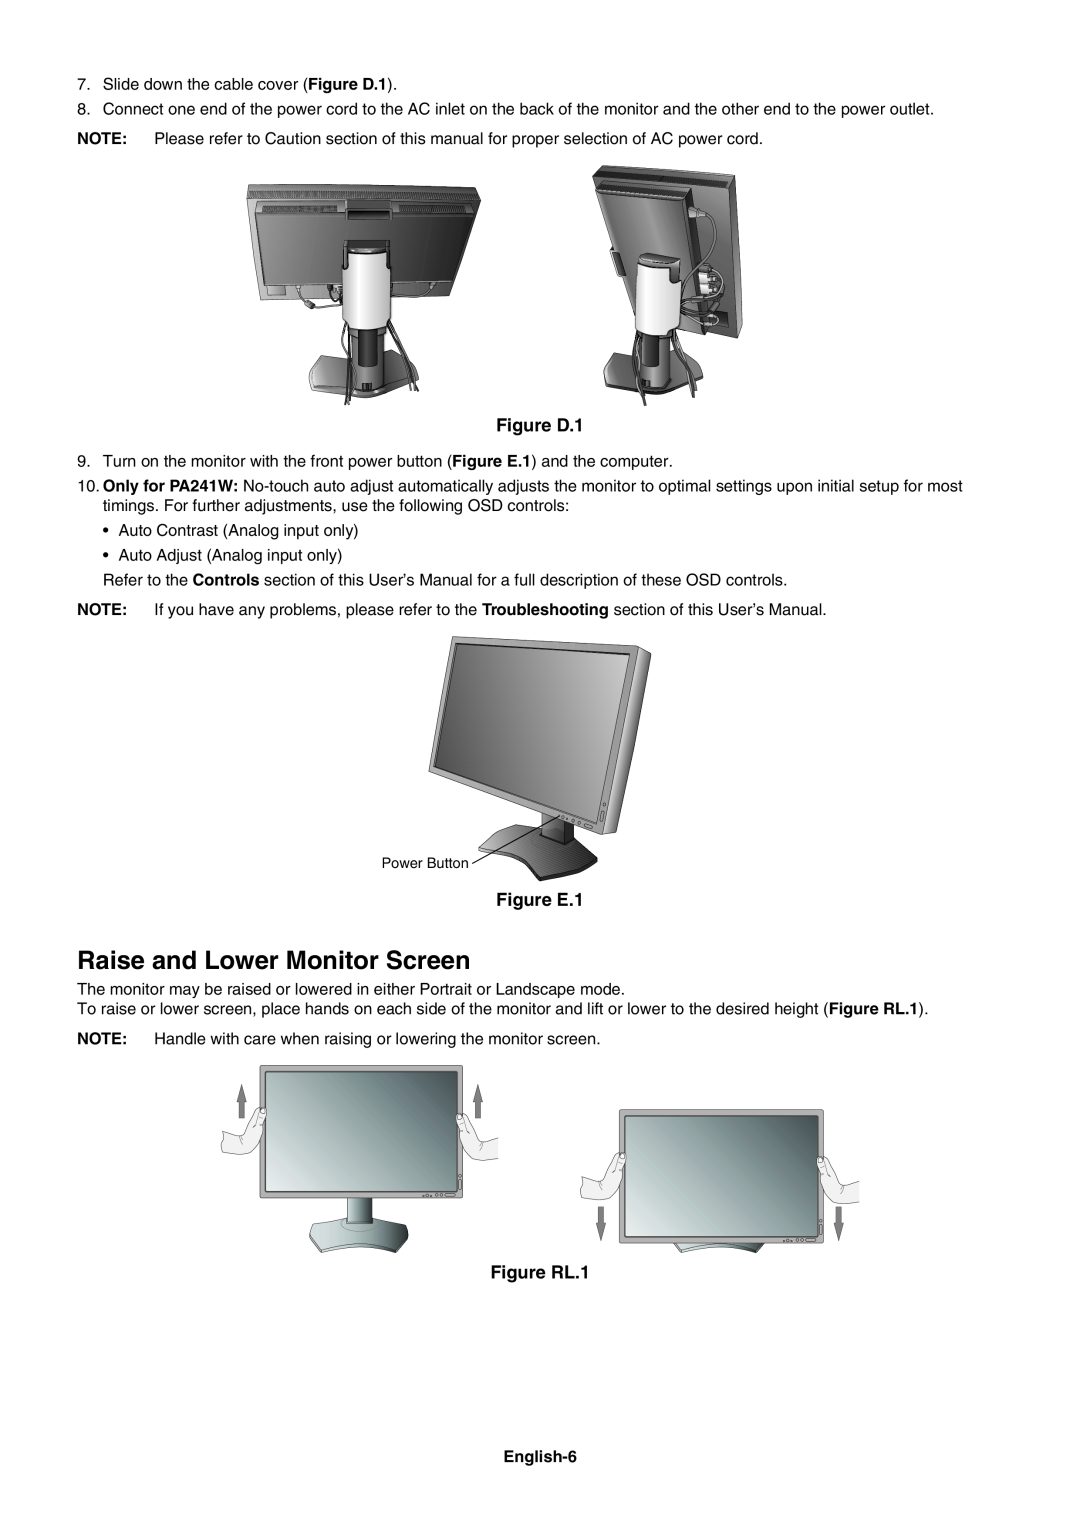 NEC PA271W user manual Raise and Lower Monitor Screen, Figure D.1, Figure E.1, Figure RL.1 